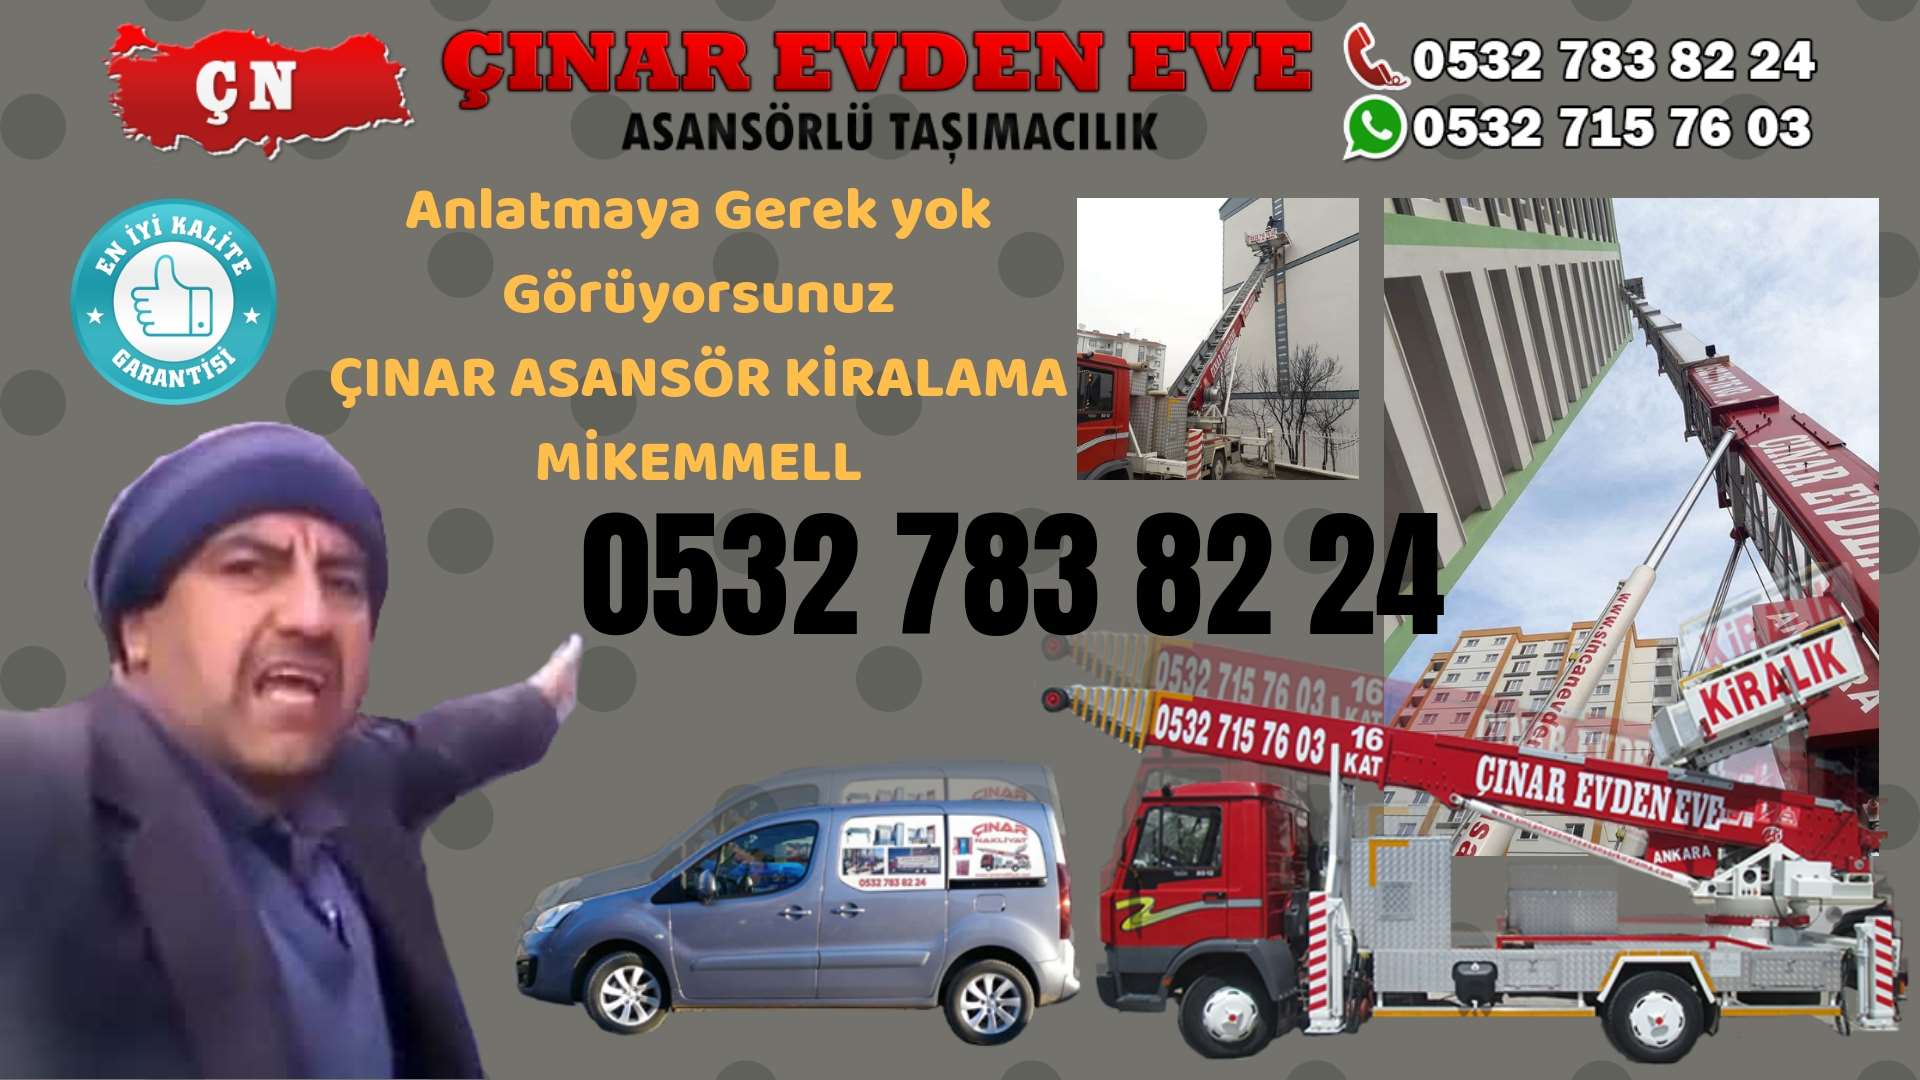 Ankara İvogsan Ankara asansör kiralama hizmeti sizlere başta kalite ve maddi acıdan tasarruf 0532 715 76 03